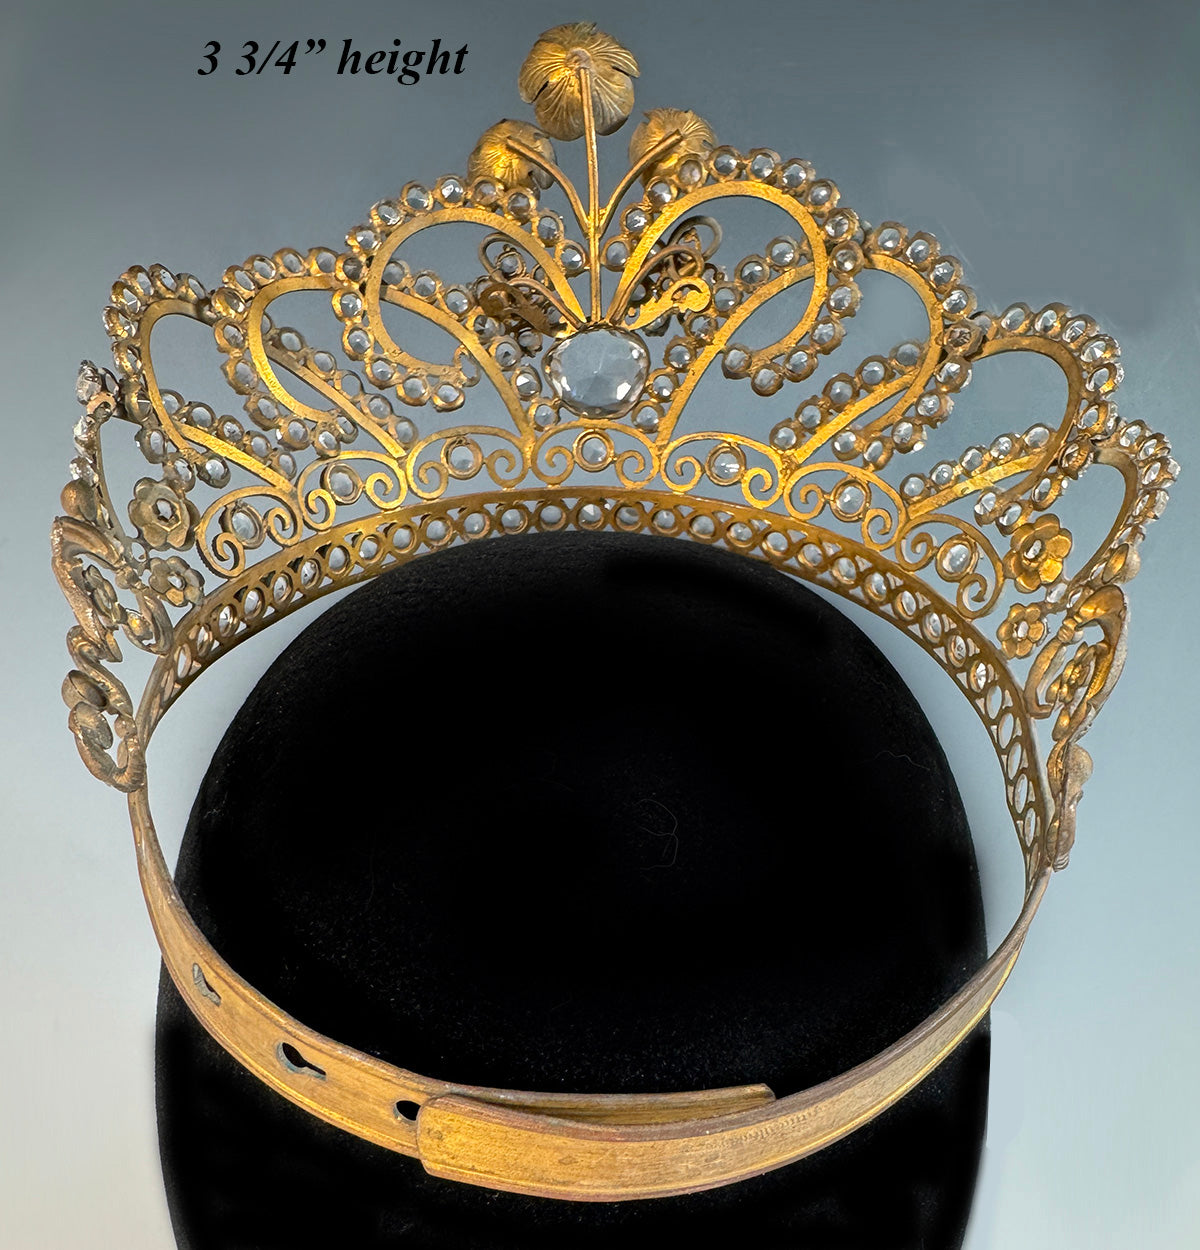 RARE Stunning c.1820-30 French Ormolu and Paste Gem Tiara, Crown, Diadem, Processional